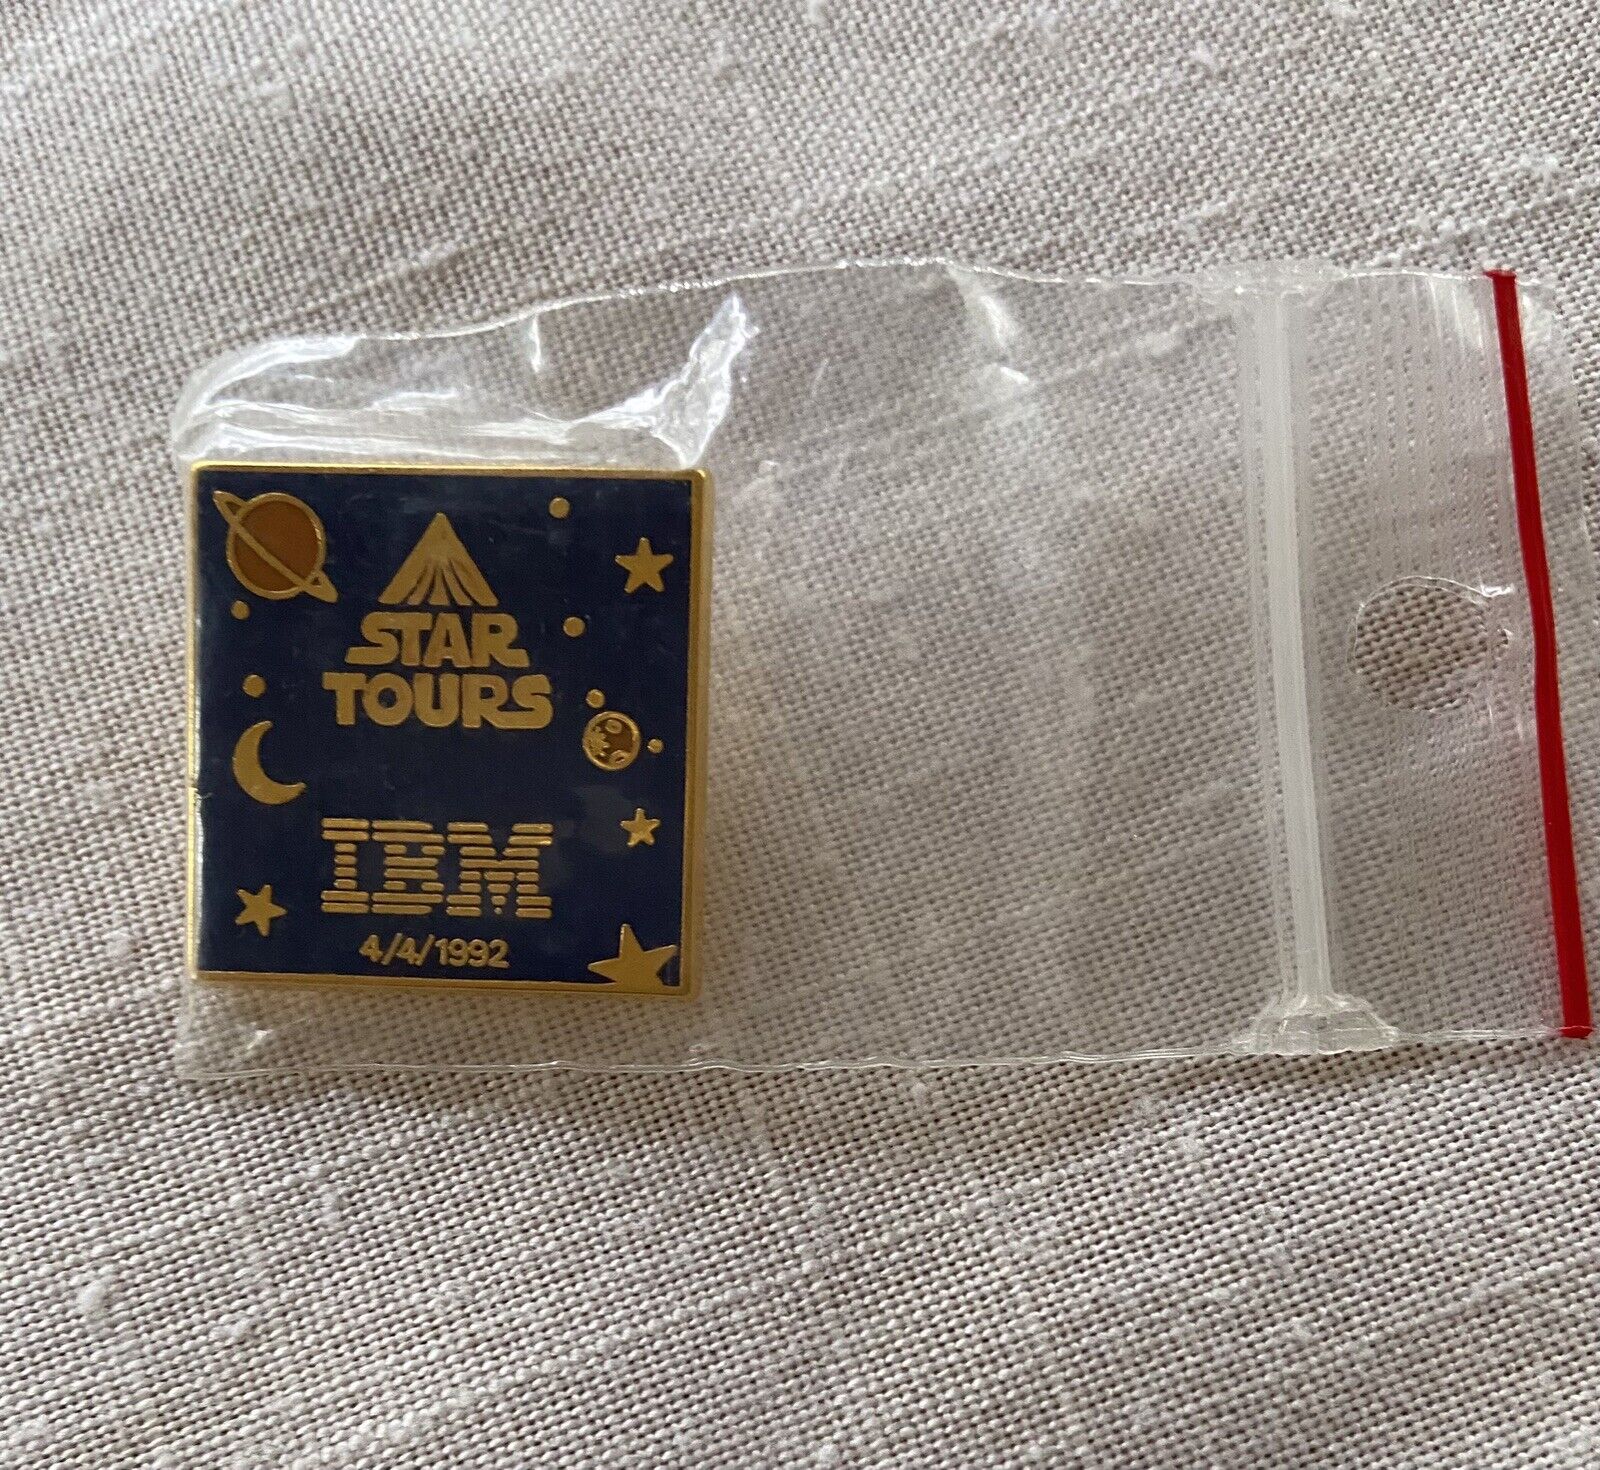 1992 EURODISNEYLAND STAR TOURS IBM Enamel Brass Lapel Pin Square